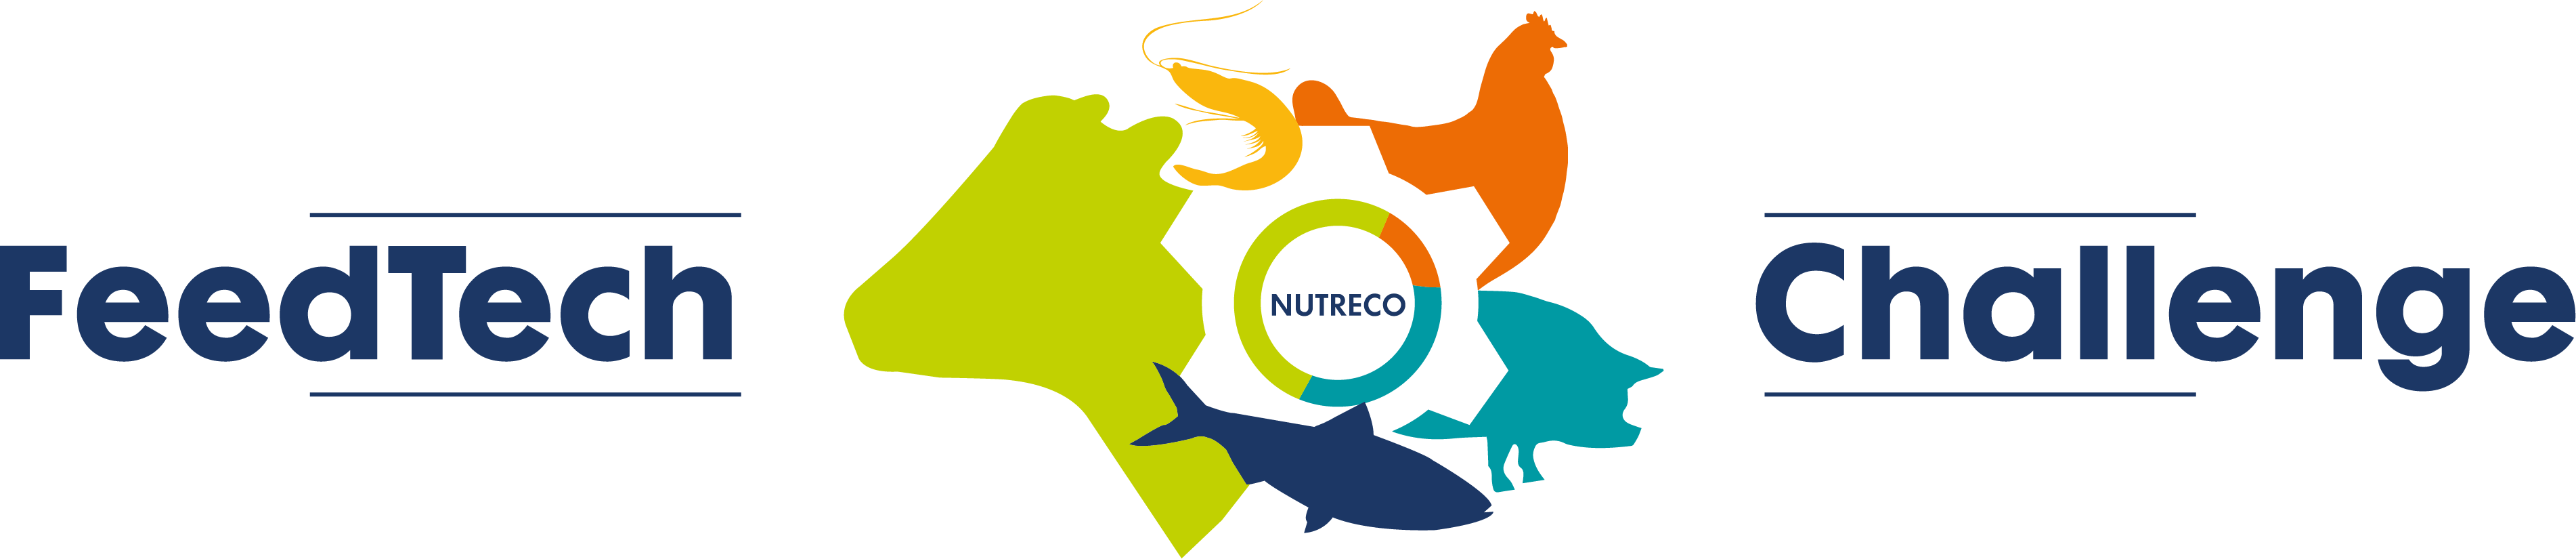 Nutreco Feed Tech Challenge (3805x825)